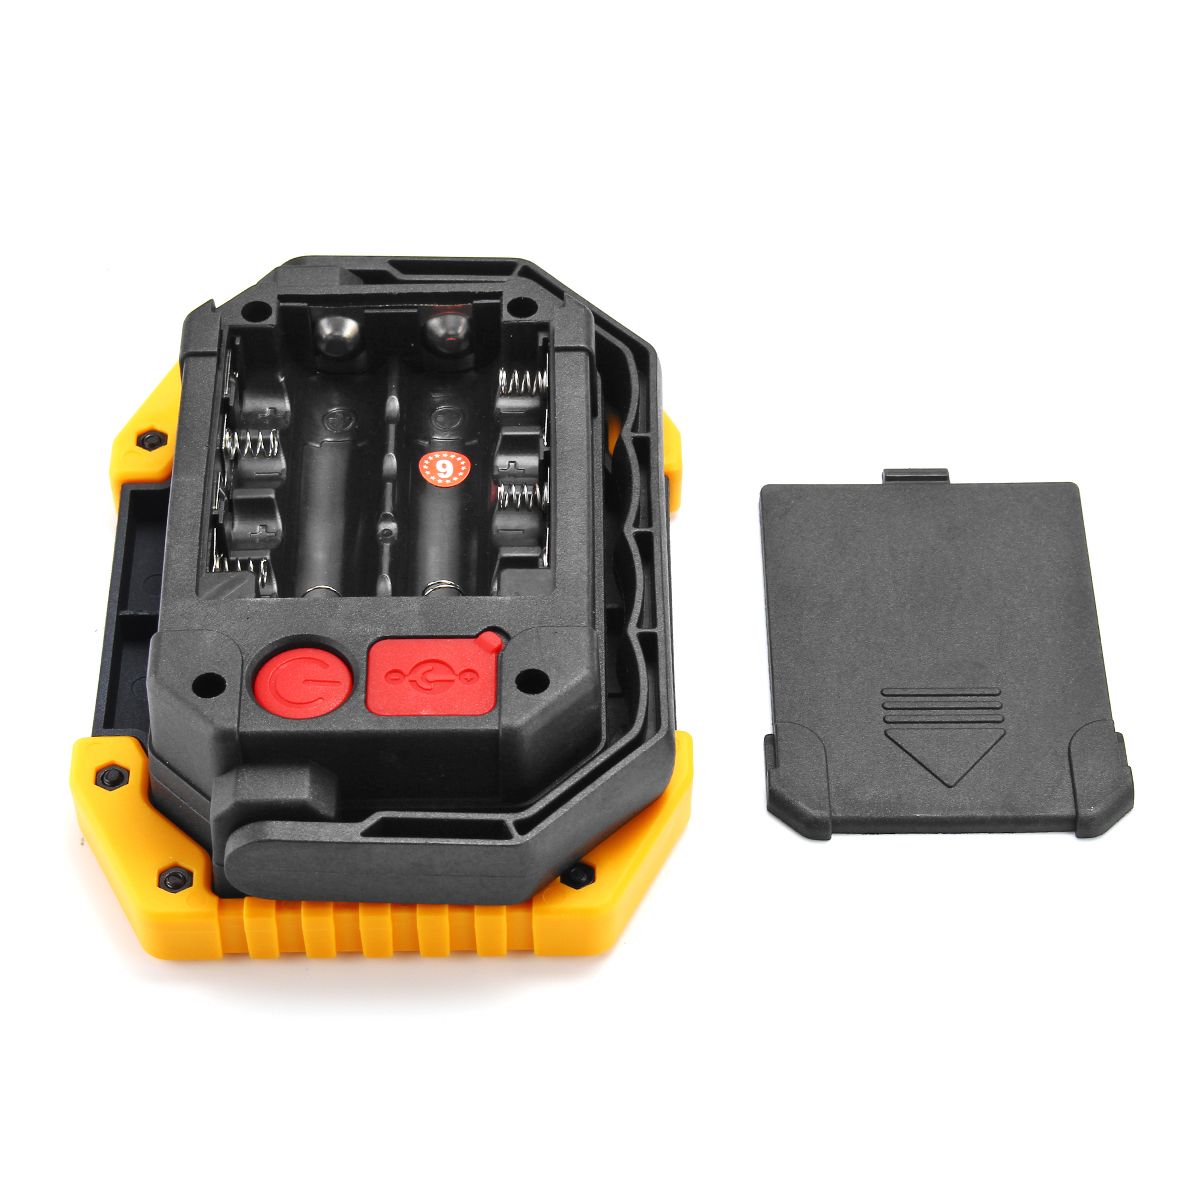 XANESreg-30W-3000LM2-COB-Work-Light-USB-Rechargeable-Waterproof-LED-Floodlight-Emergency-Hunting-Fis-1603760